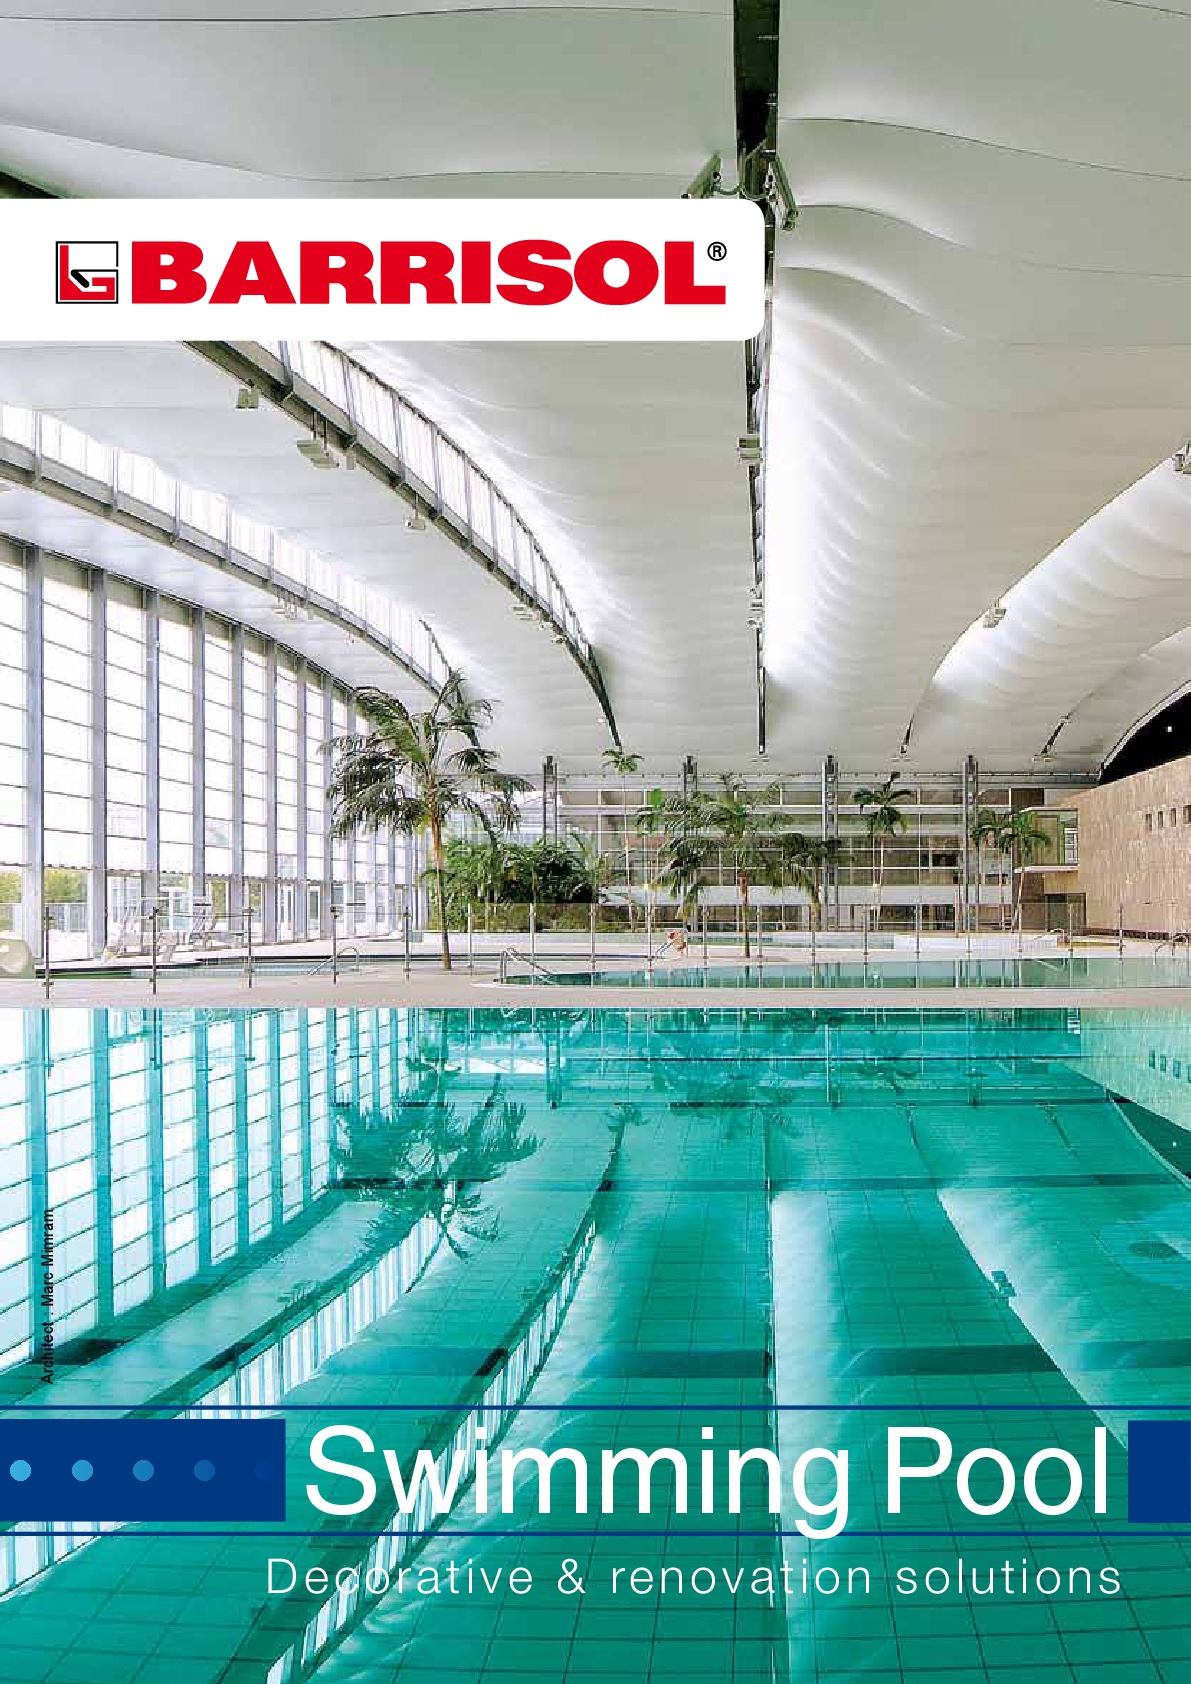 BARRISOL Swimming Pool